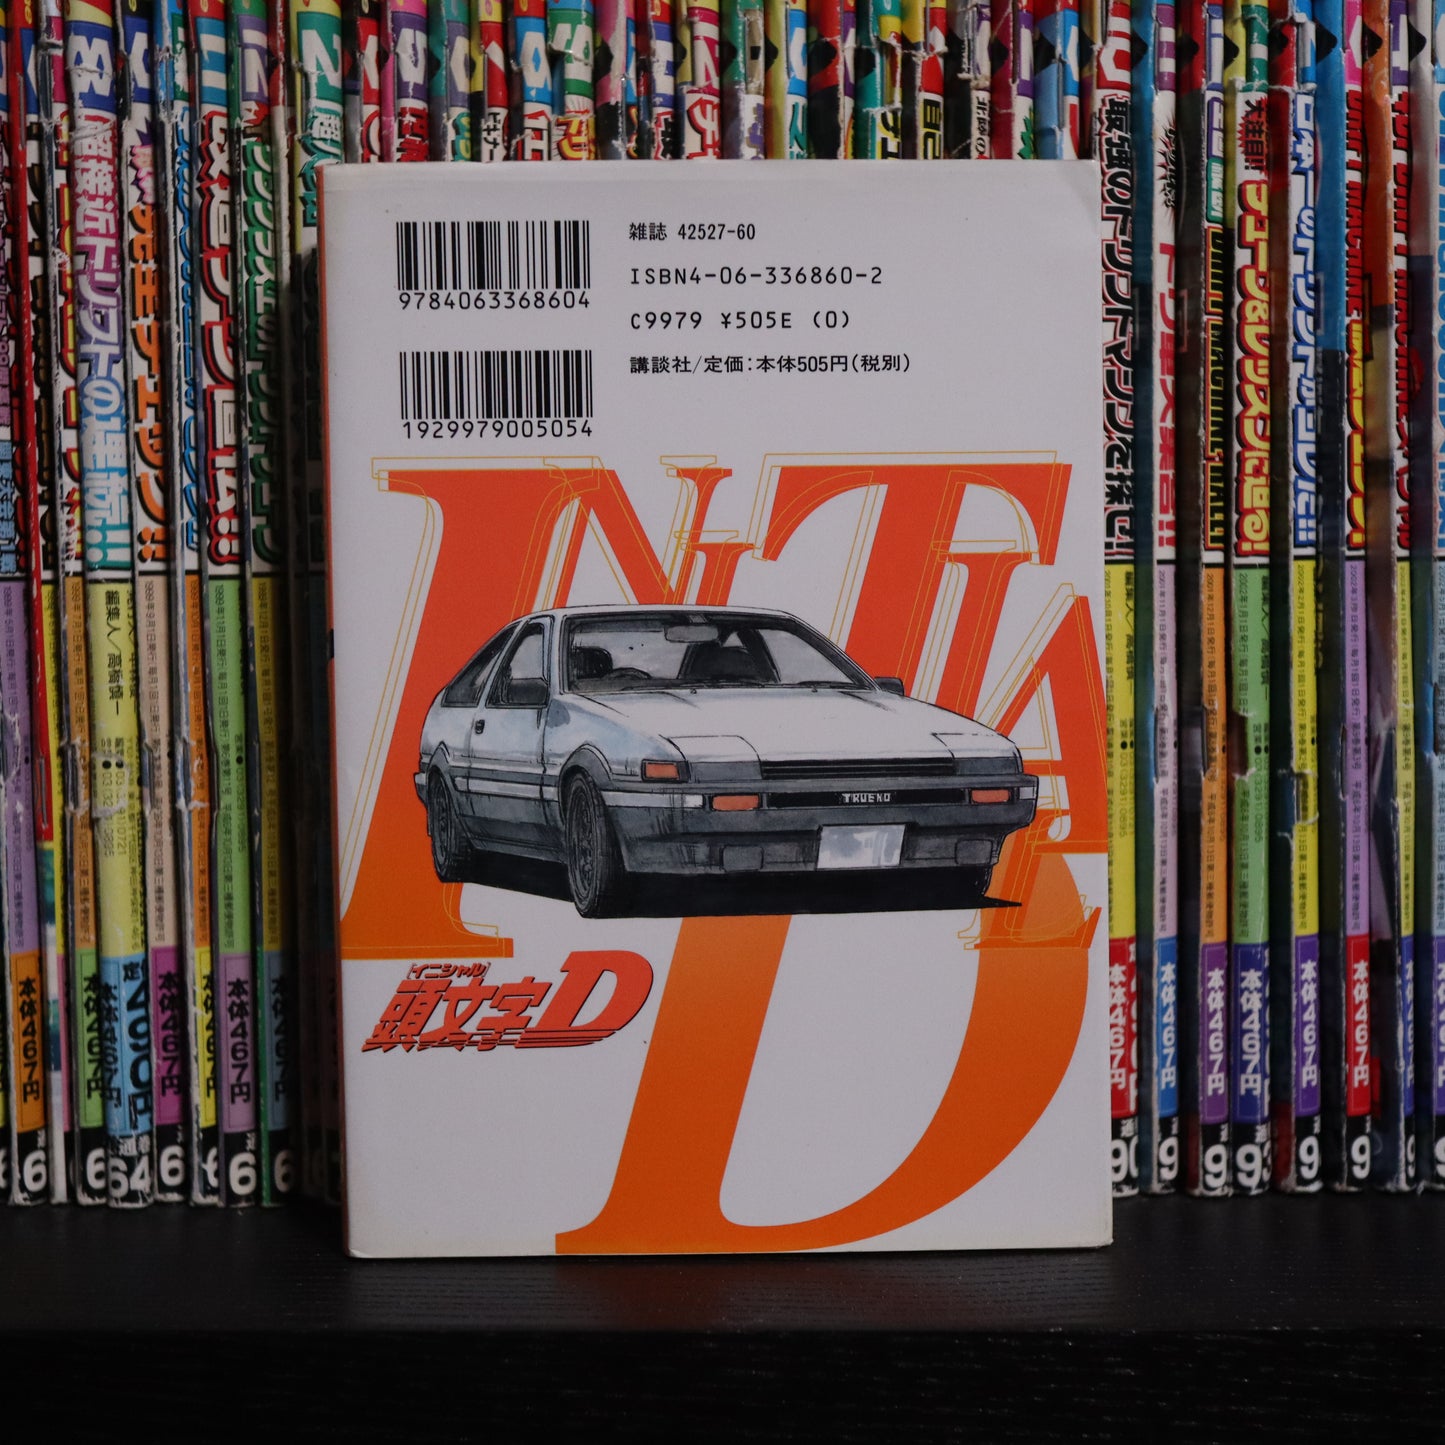 Initial D Manga Volume 18